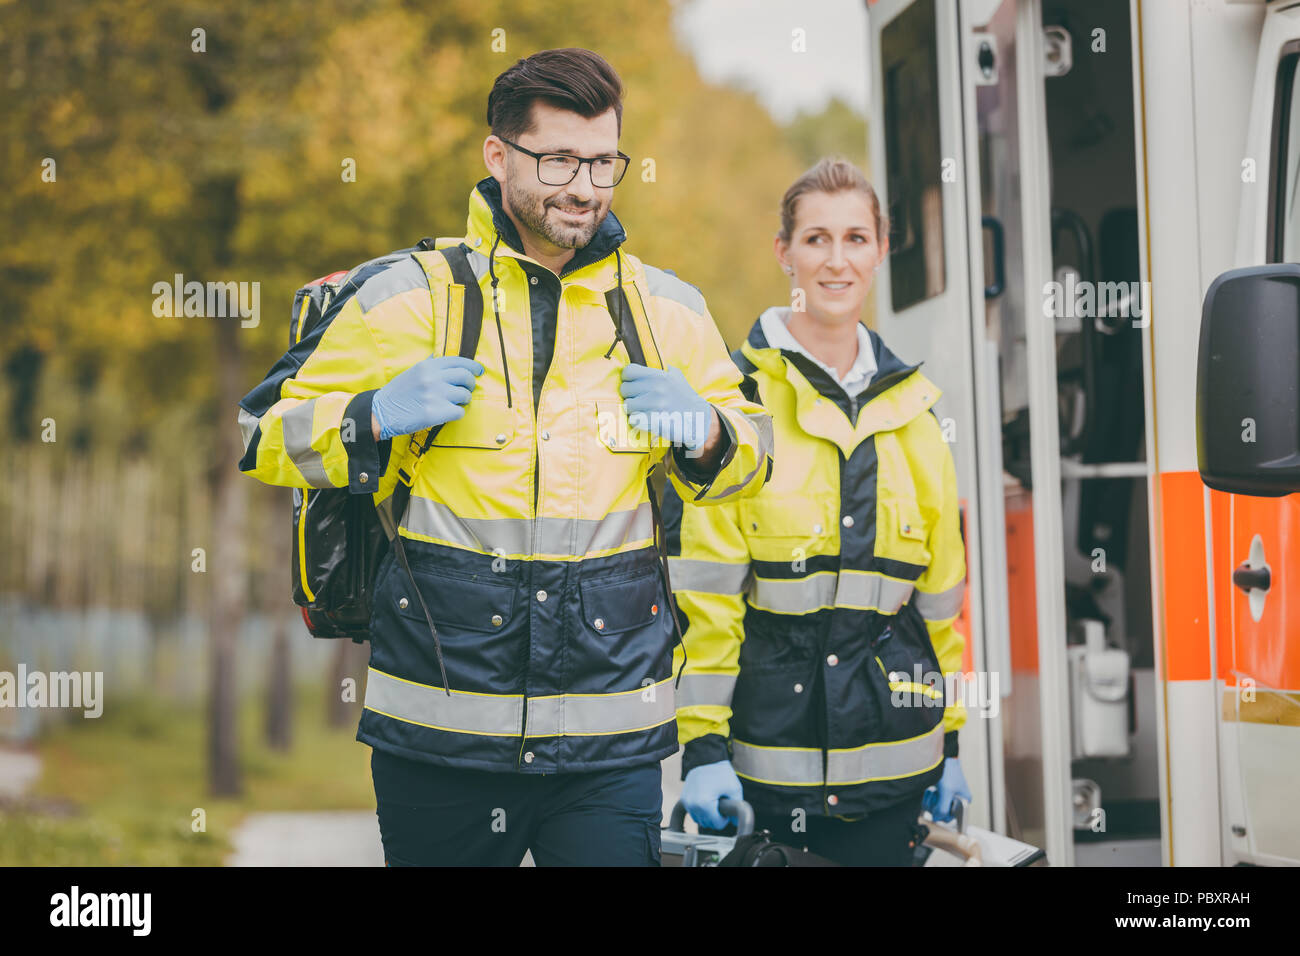 Paramedic nurse and emergency doctor at ambulance Stock Photo